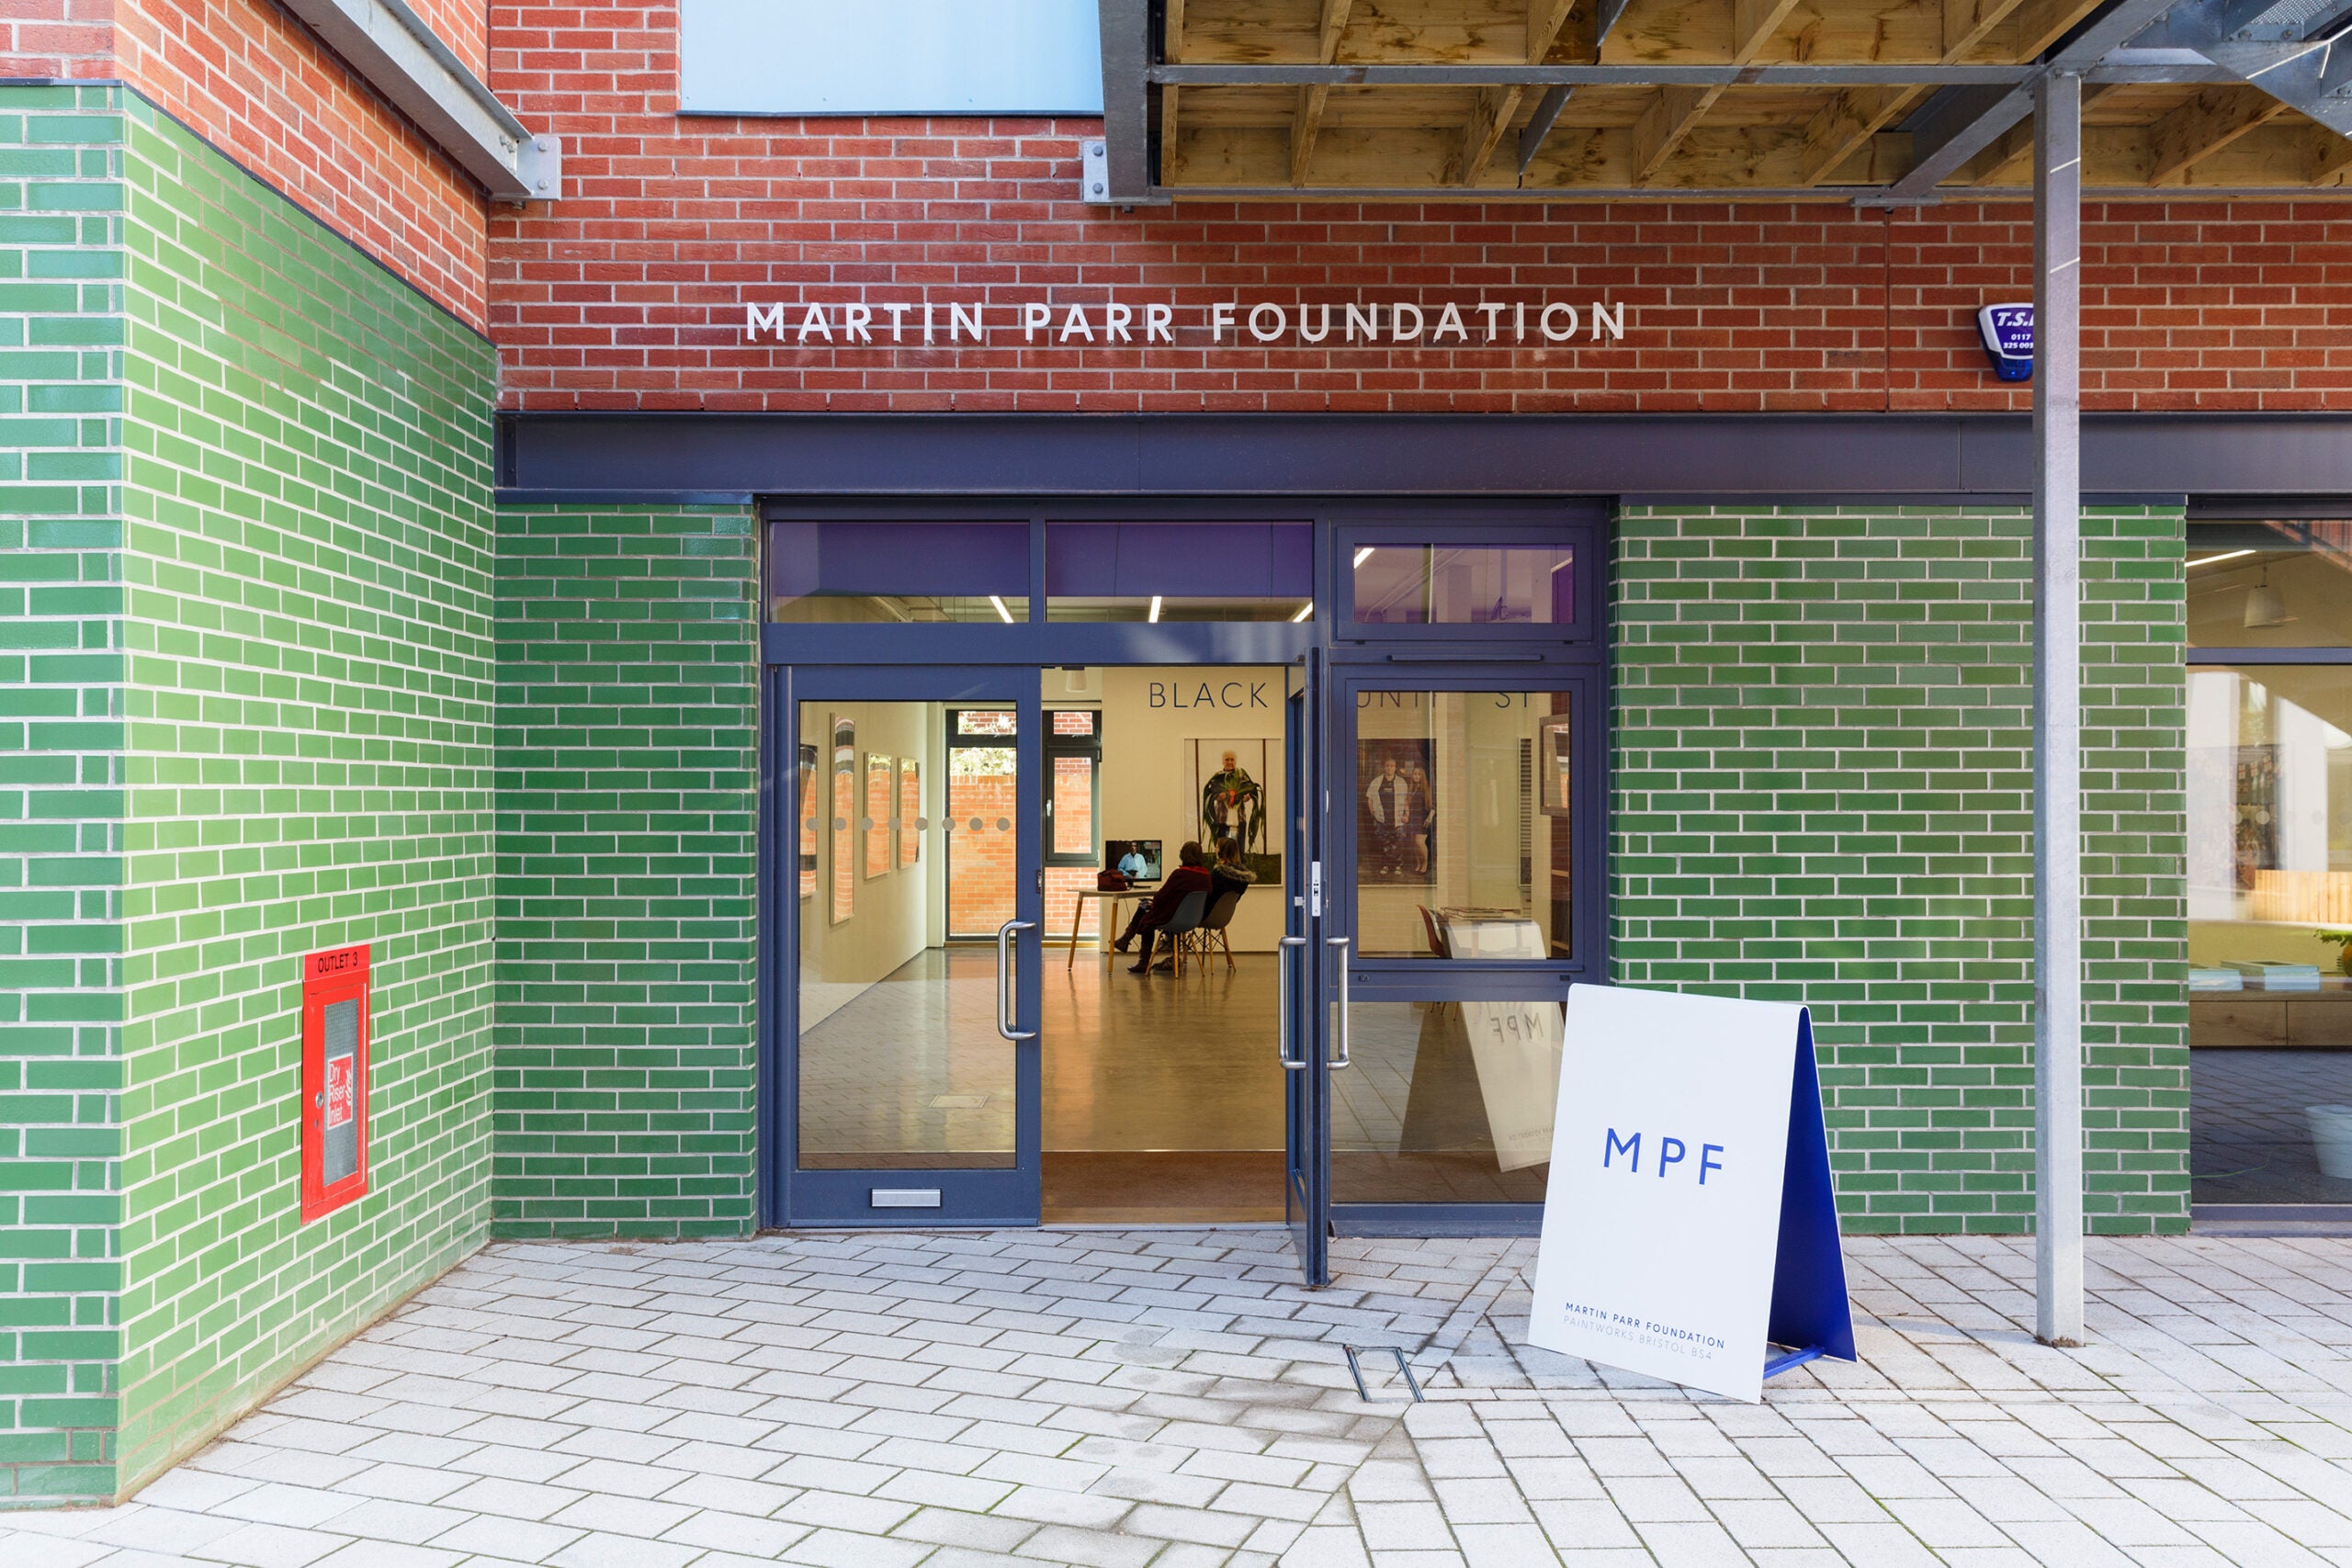 Martin Parr Foundation, Bristol, 2017 Â© Martin Parr Foundation